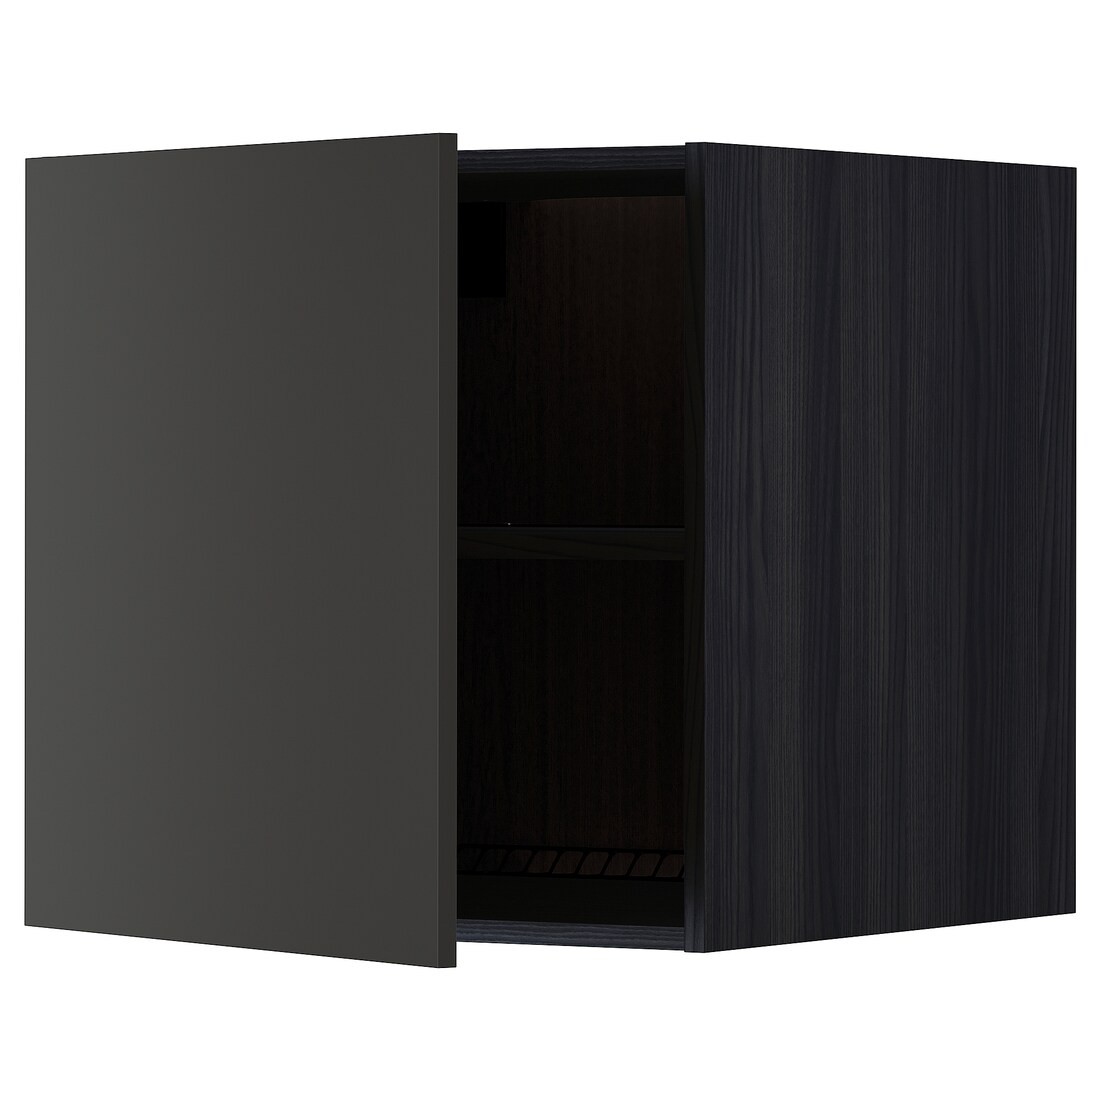 IKEA METOD МЕТОД Верхний шкаф для холодильника / морозильника, черный / Nickebo матовый антрацит, 60x60 см 89498497 | 894.984.97